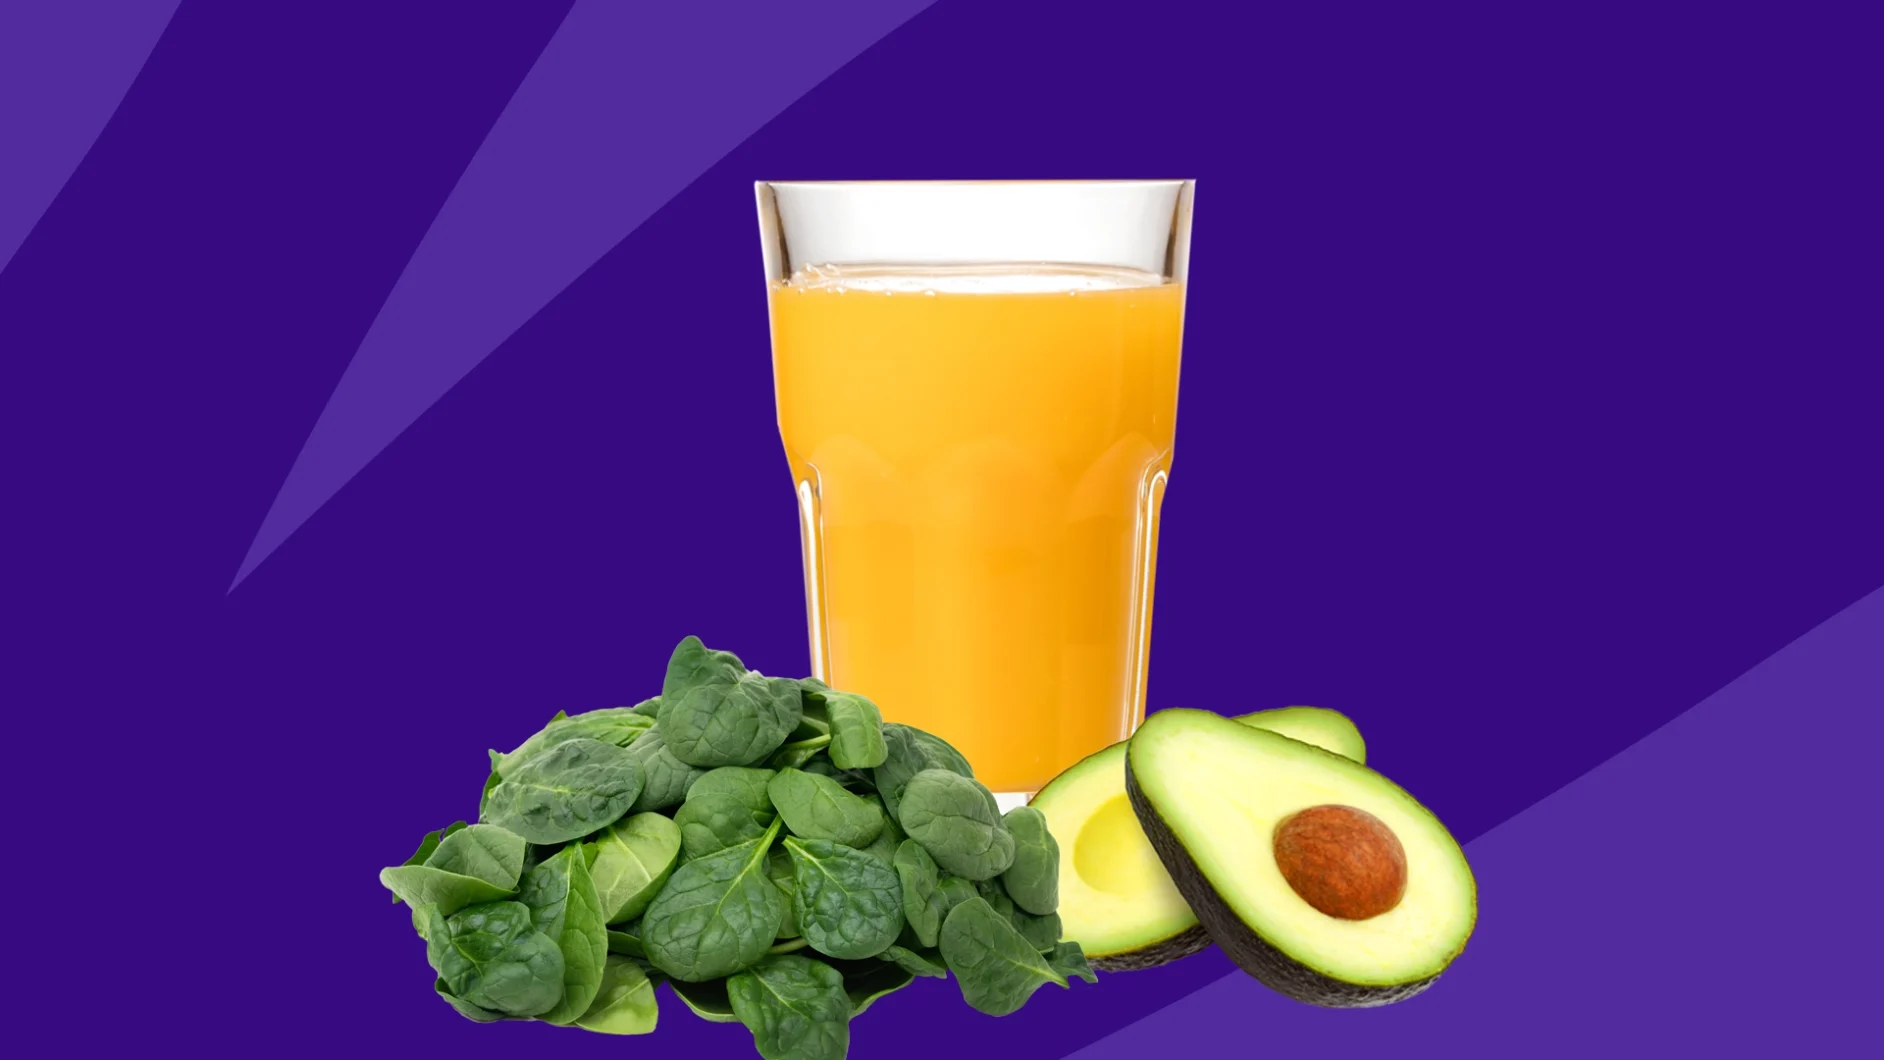 An image of folic acid foods: spinach, avocado